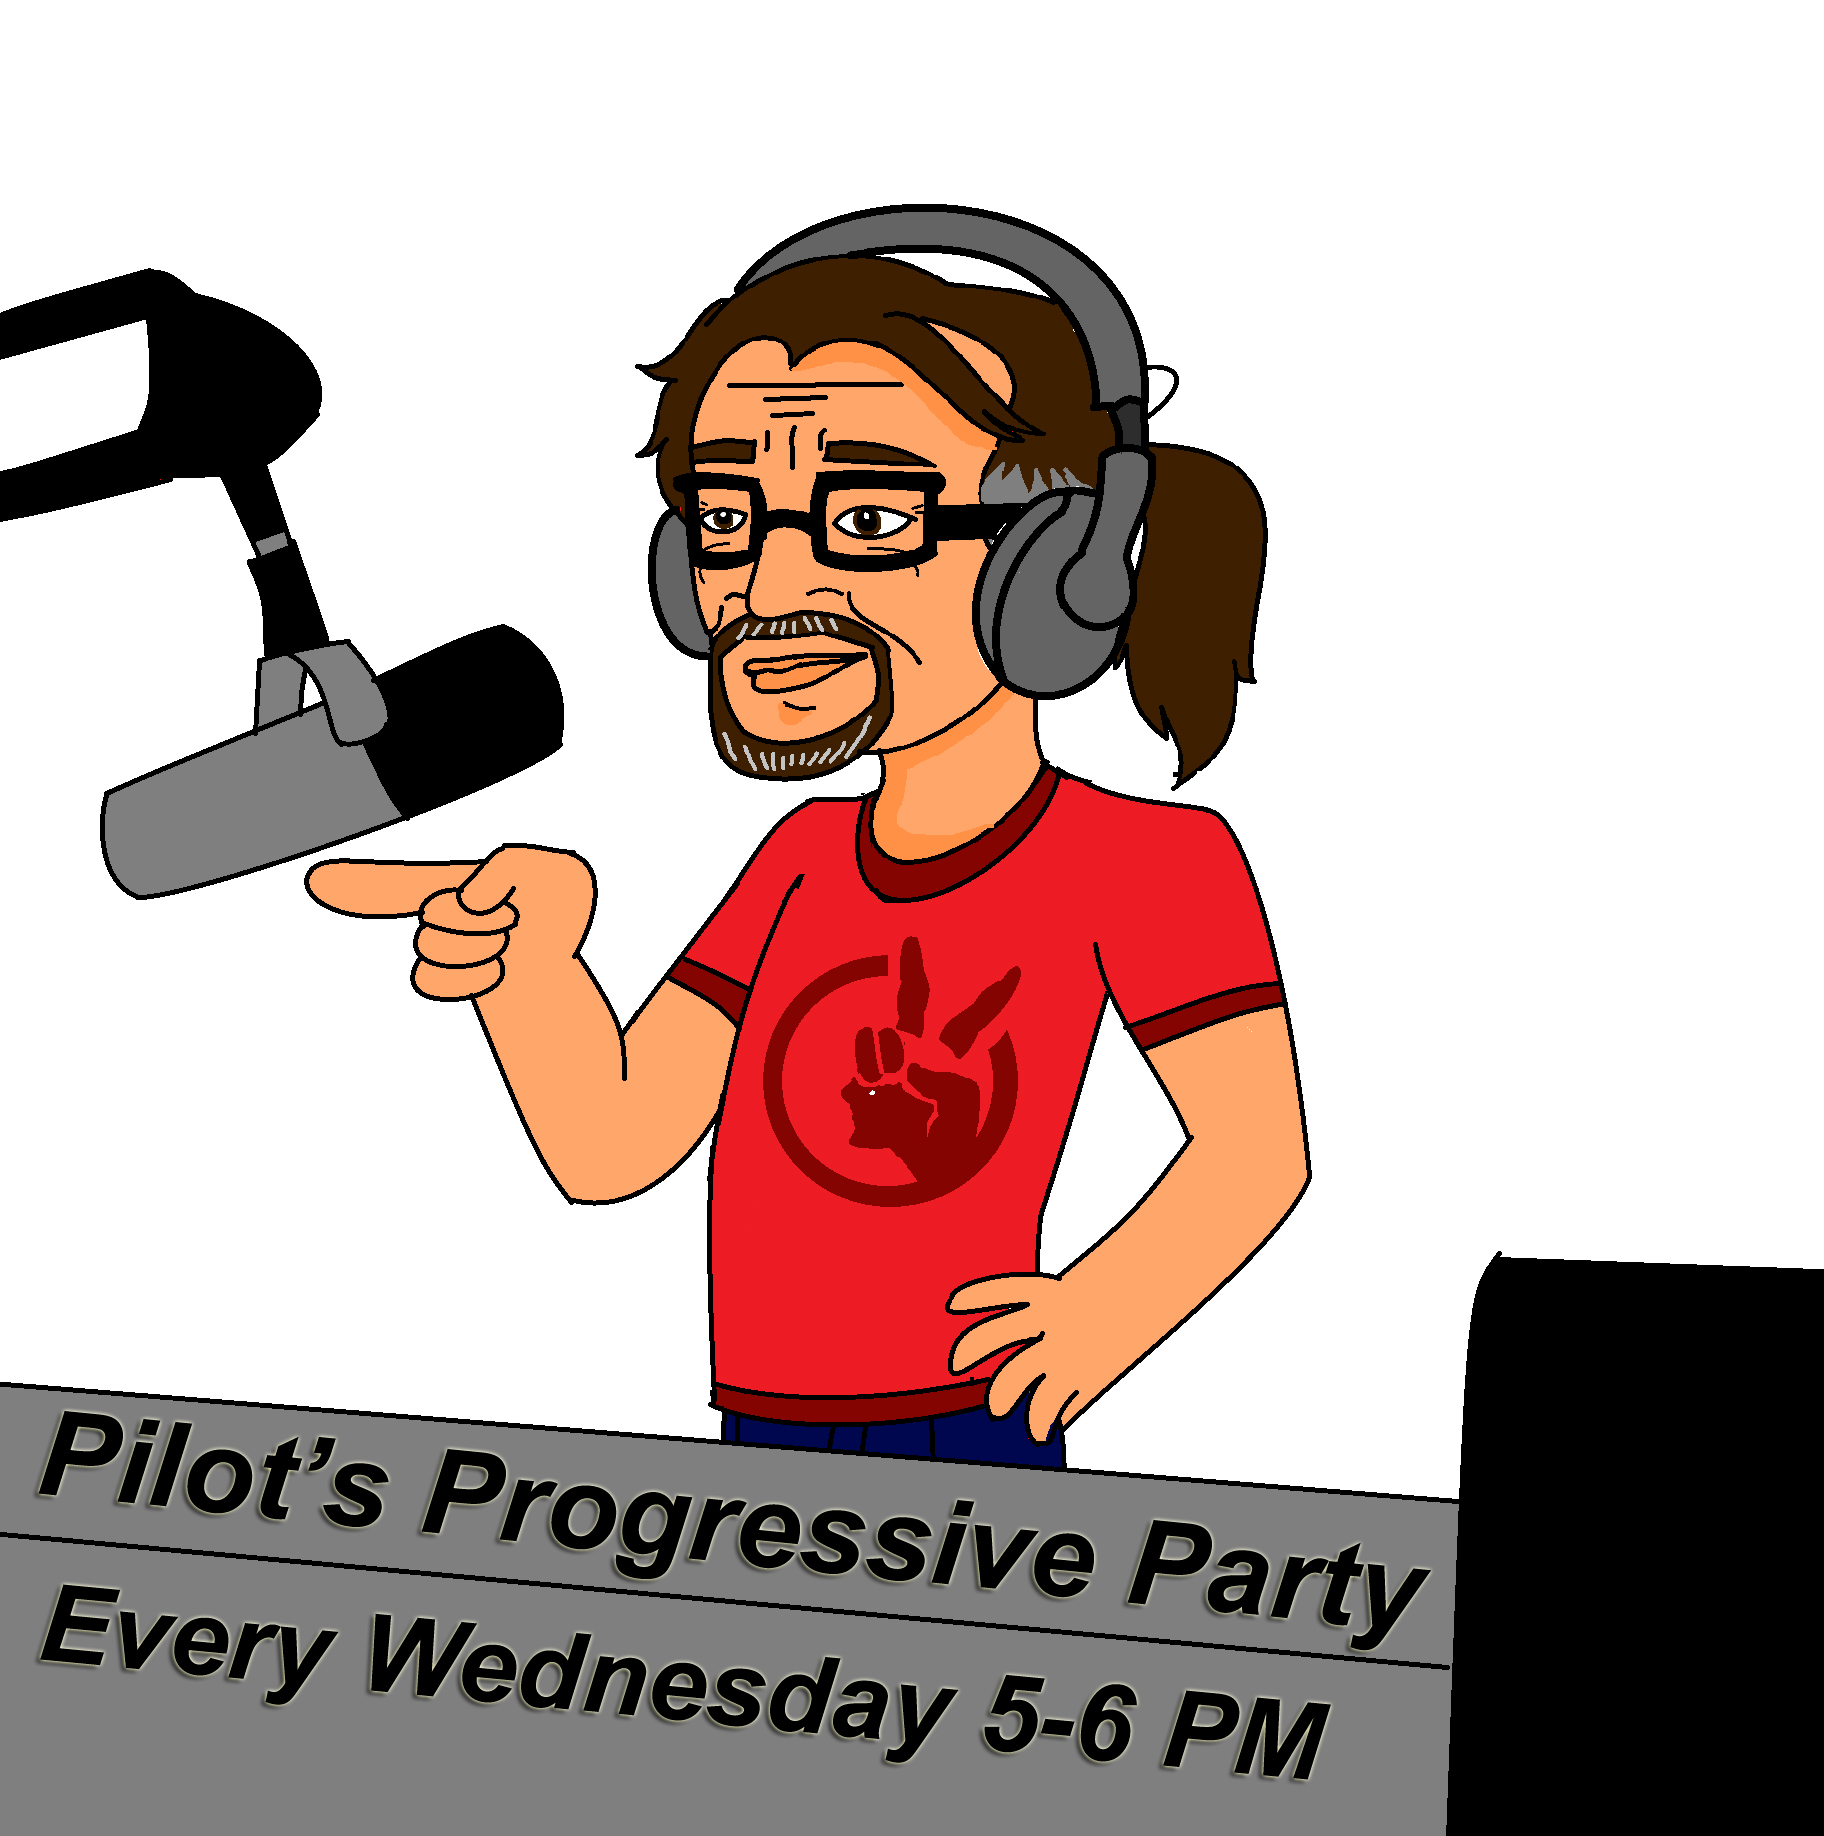 Pilot's Progressive Party